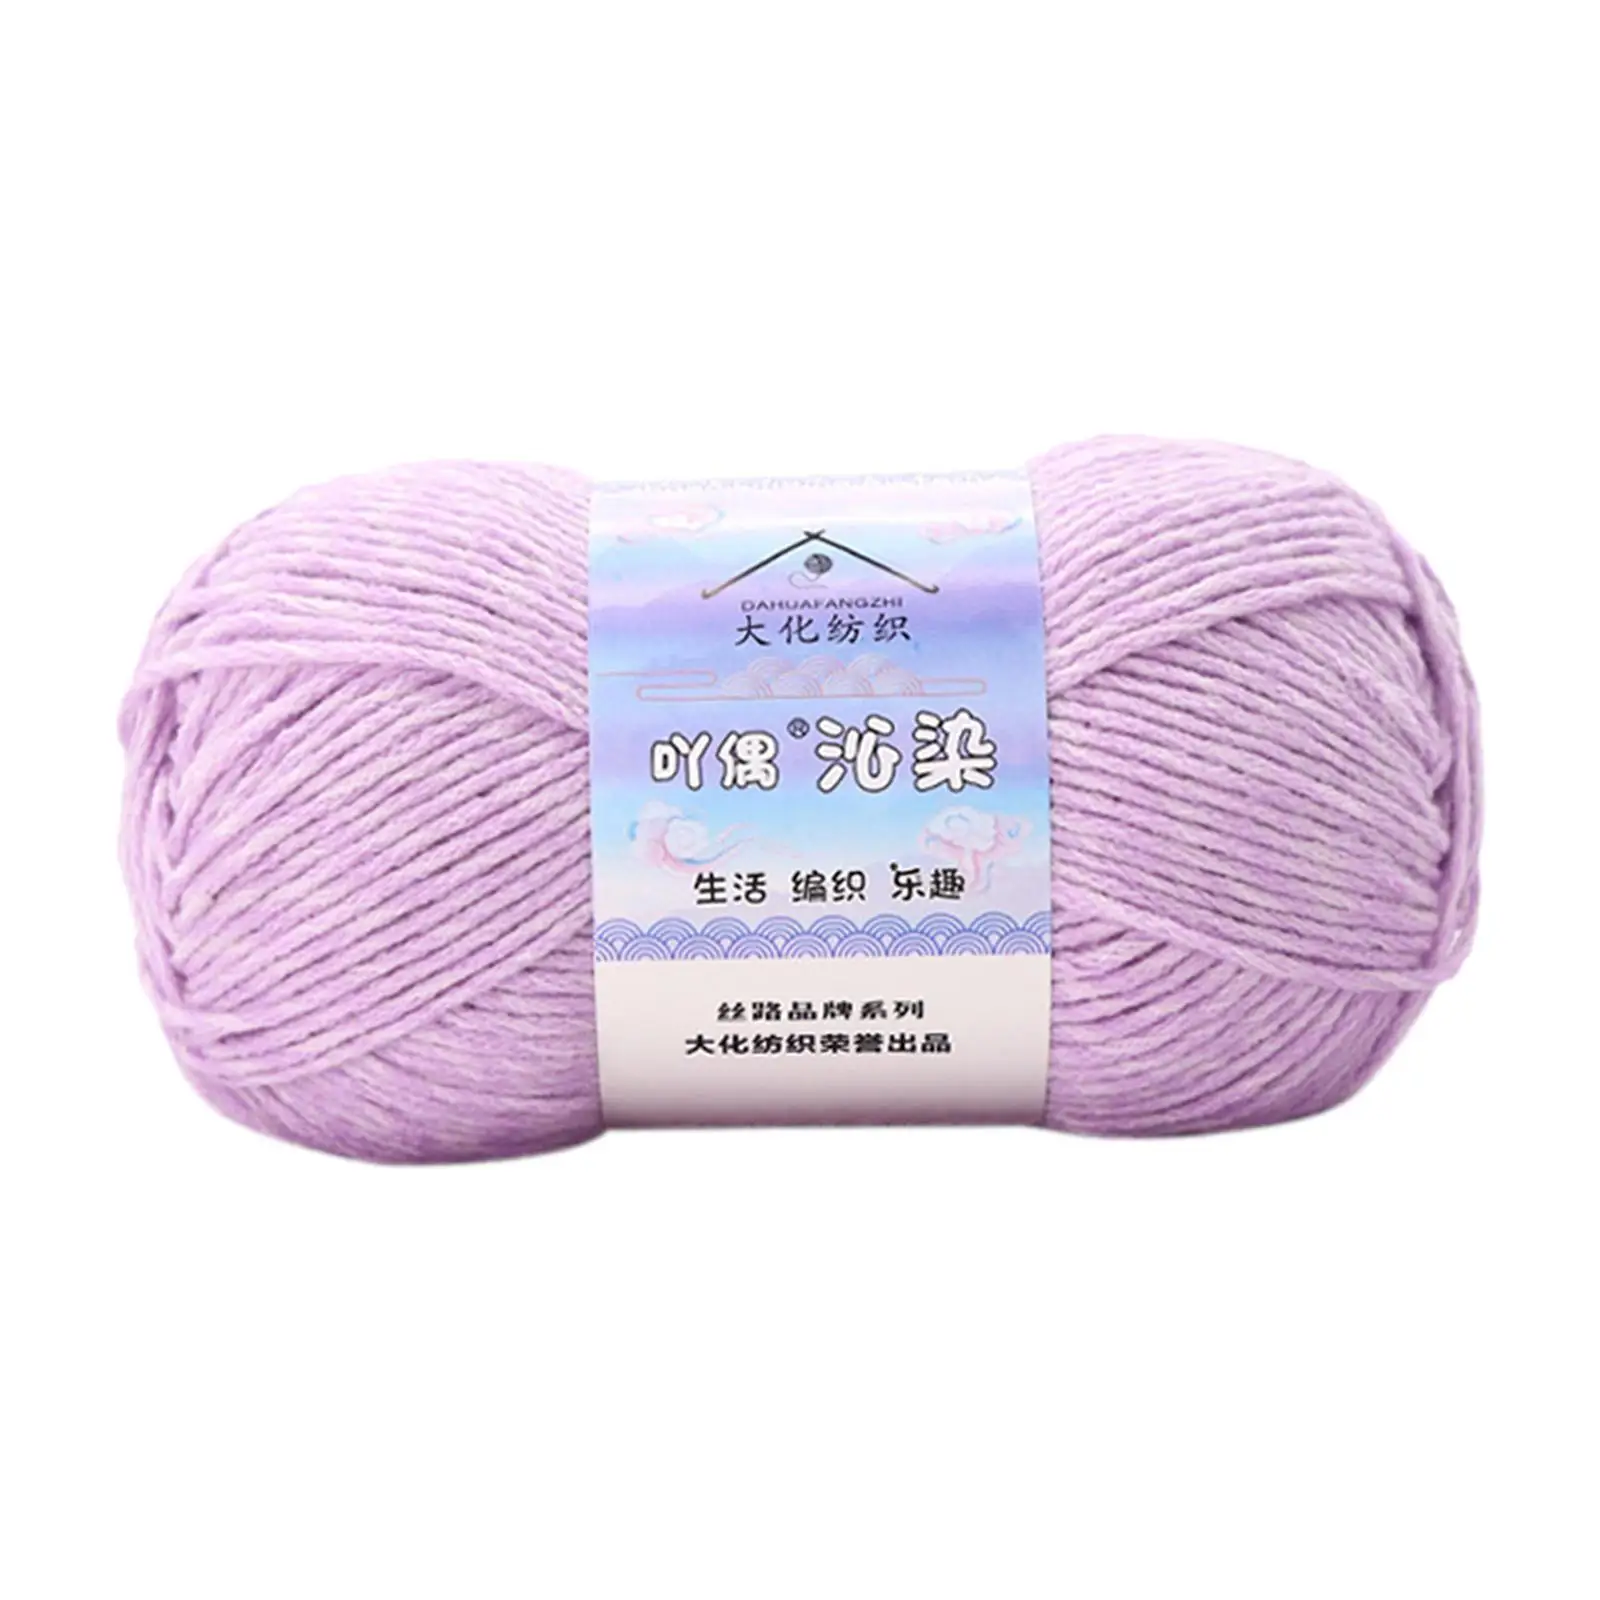 Knitting Yarn Beginner 175M/574ft Durable Accessories Hand Knitting Crochet Thread for Handbags Hats Knitting Gloves Needlework